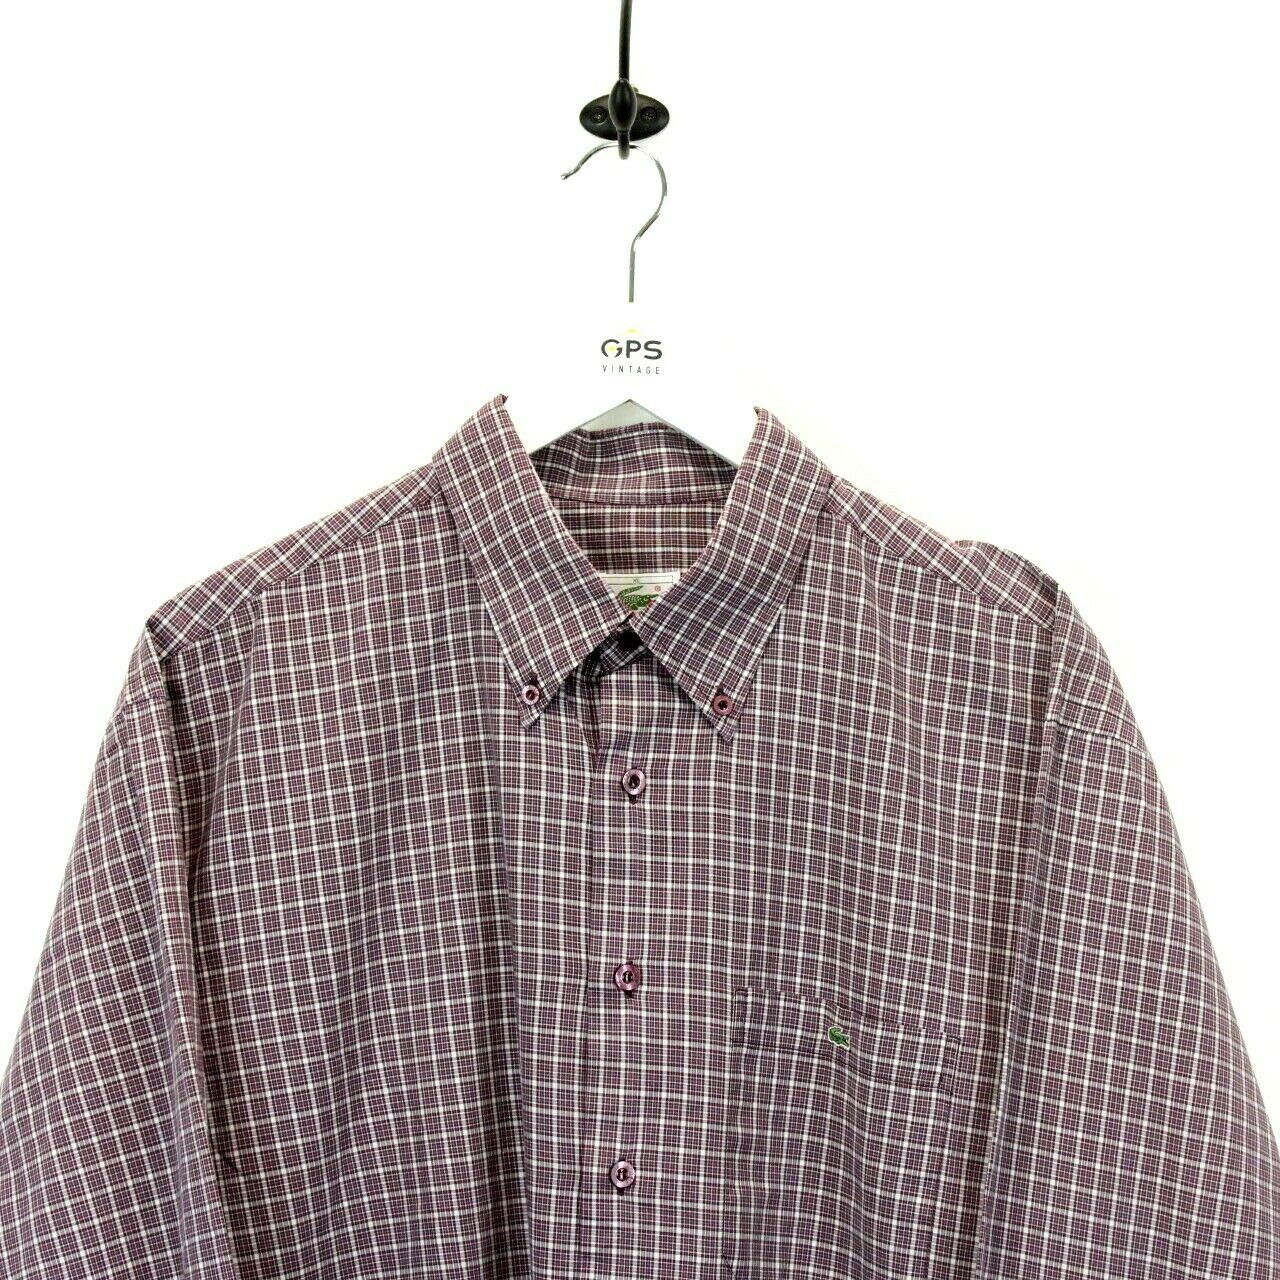 LACOSTE Shirt Purple | XL